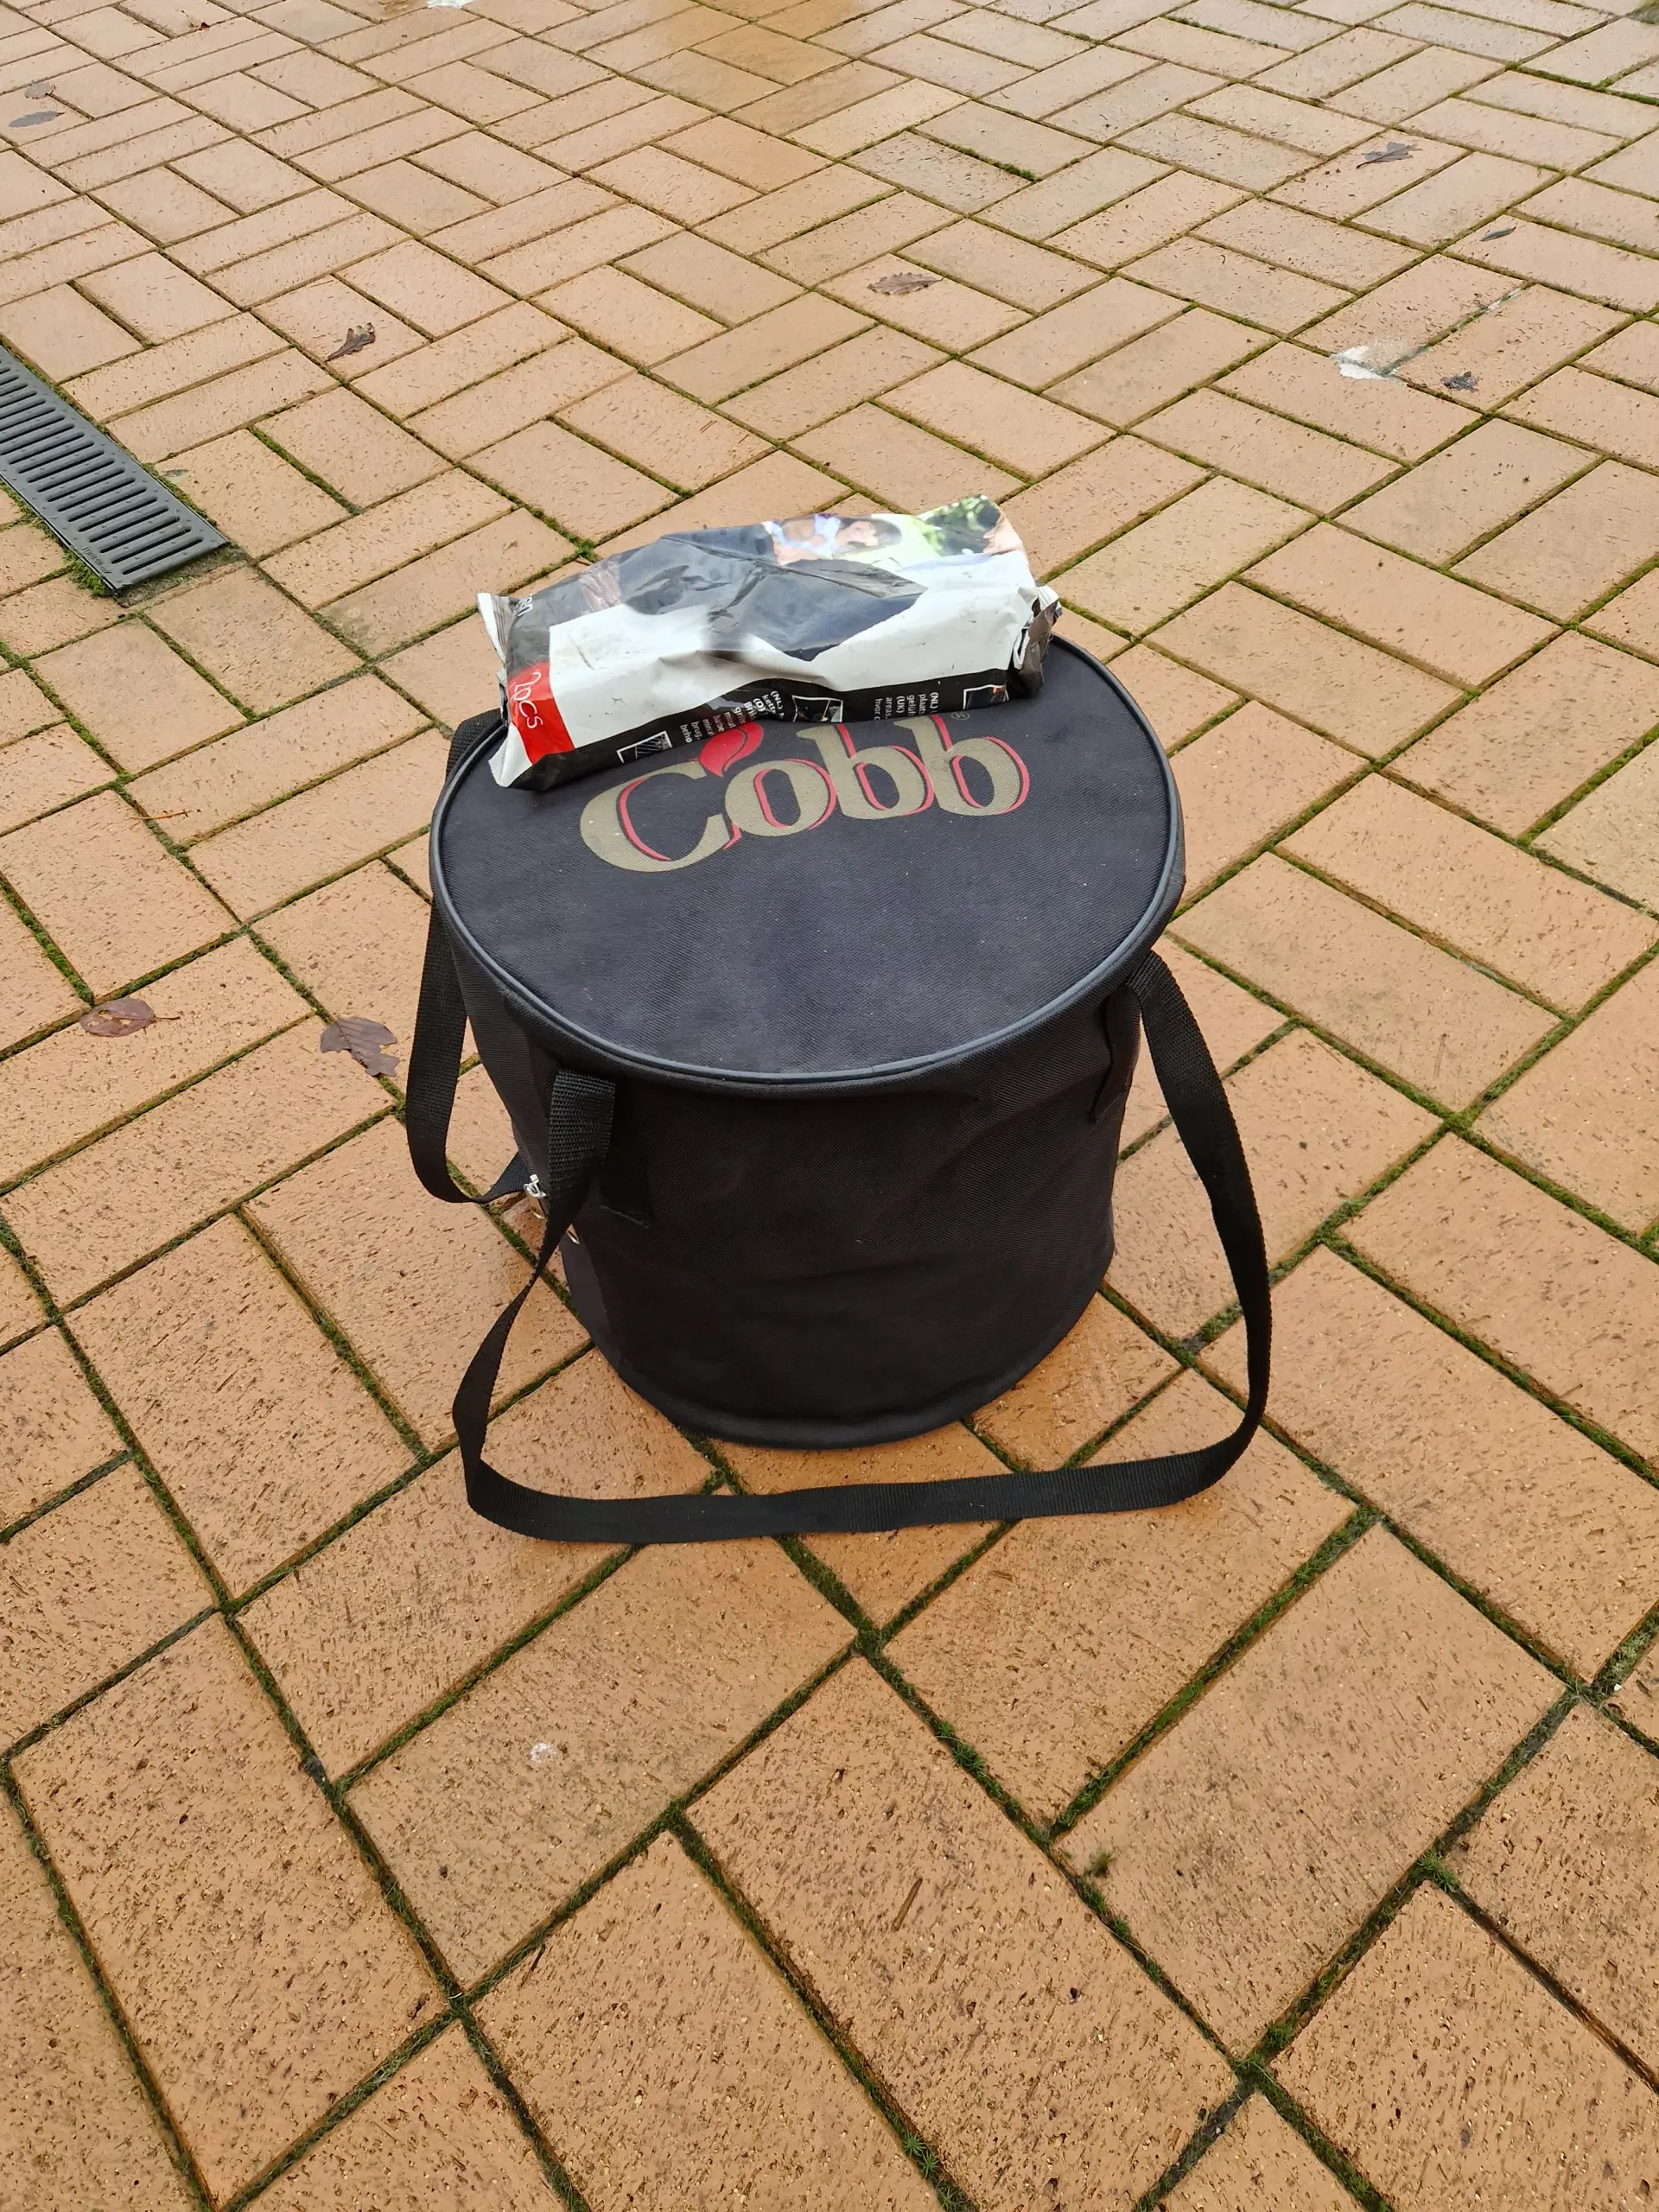 Cobb grill